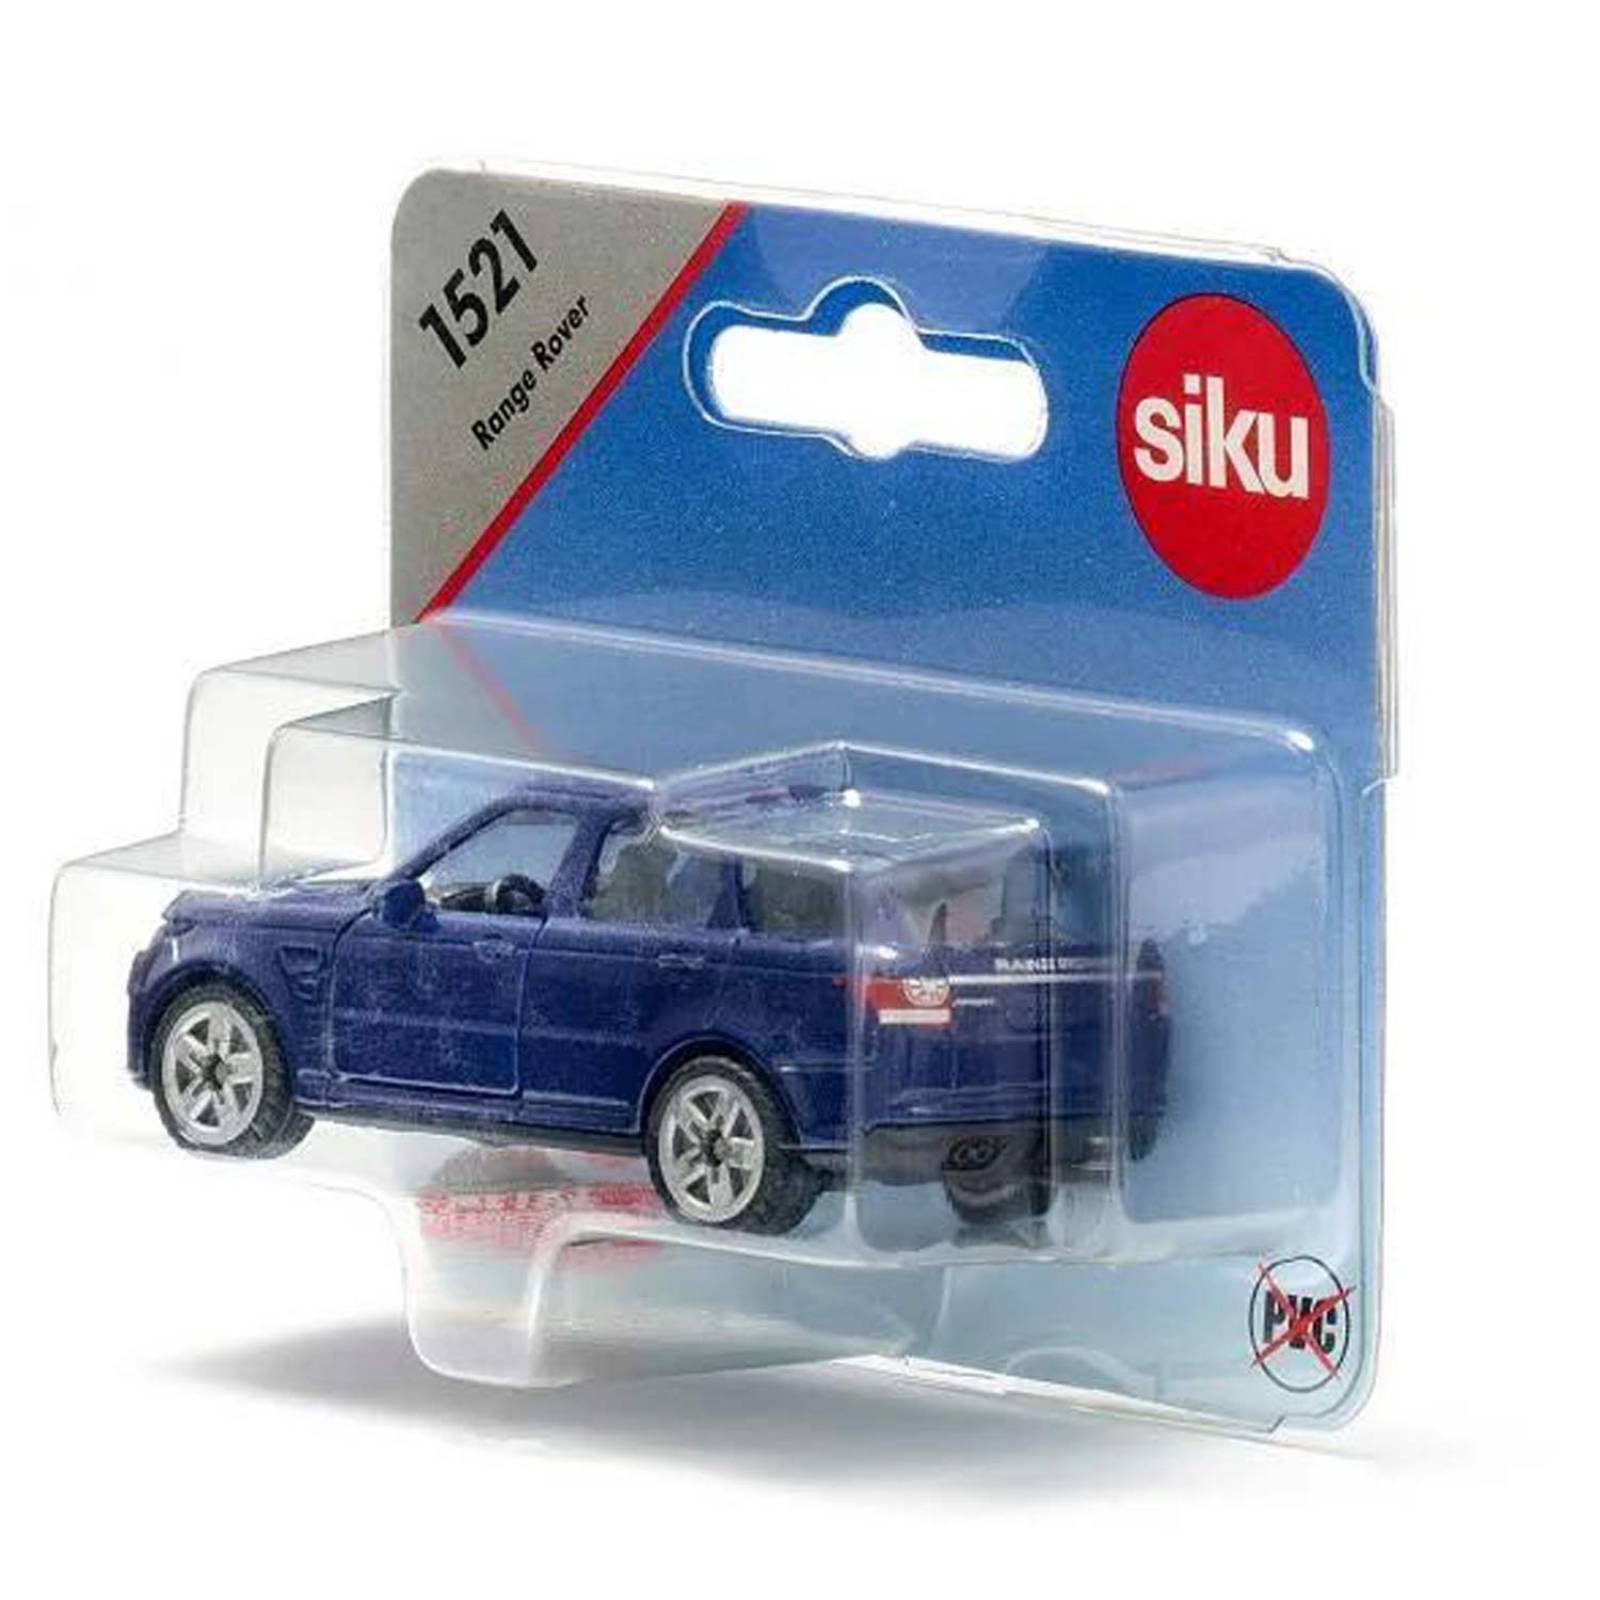 Range Rover - Single Die-Cast Toy Vehicle 1521 thumbnails